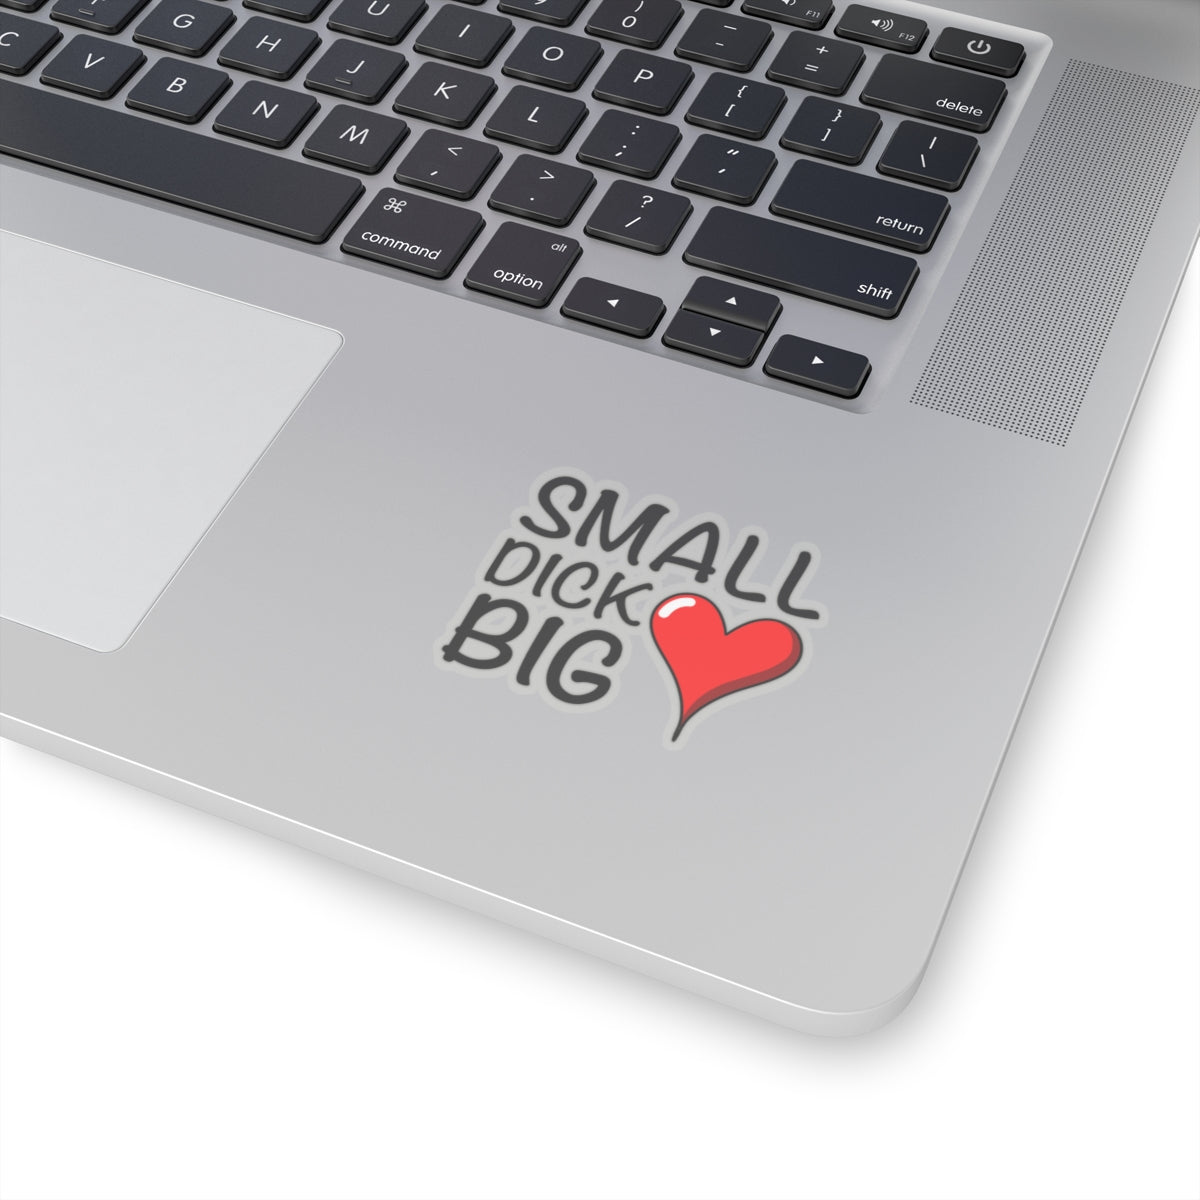 Small Dick, Big Heart Sticker